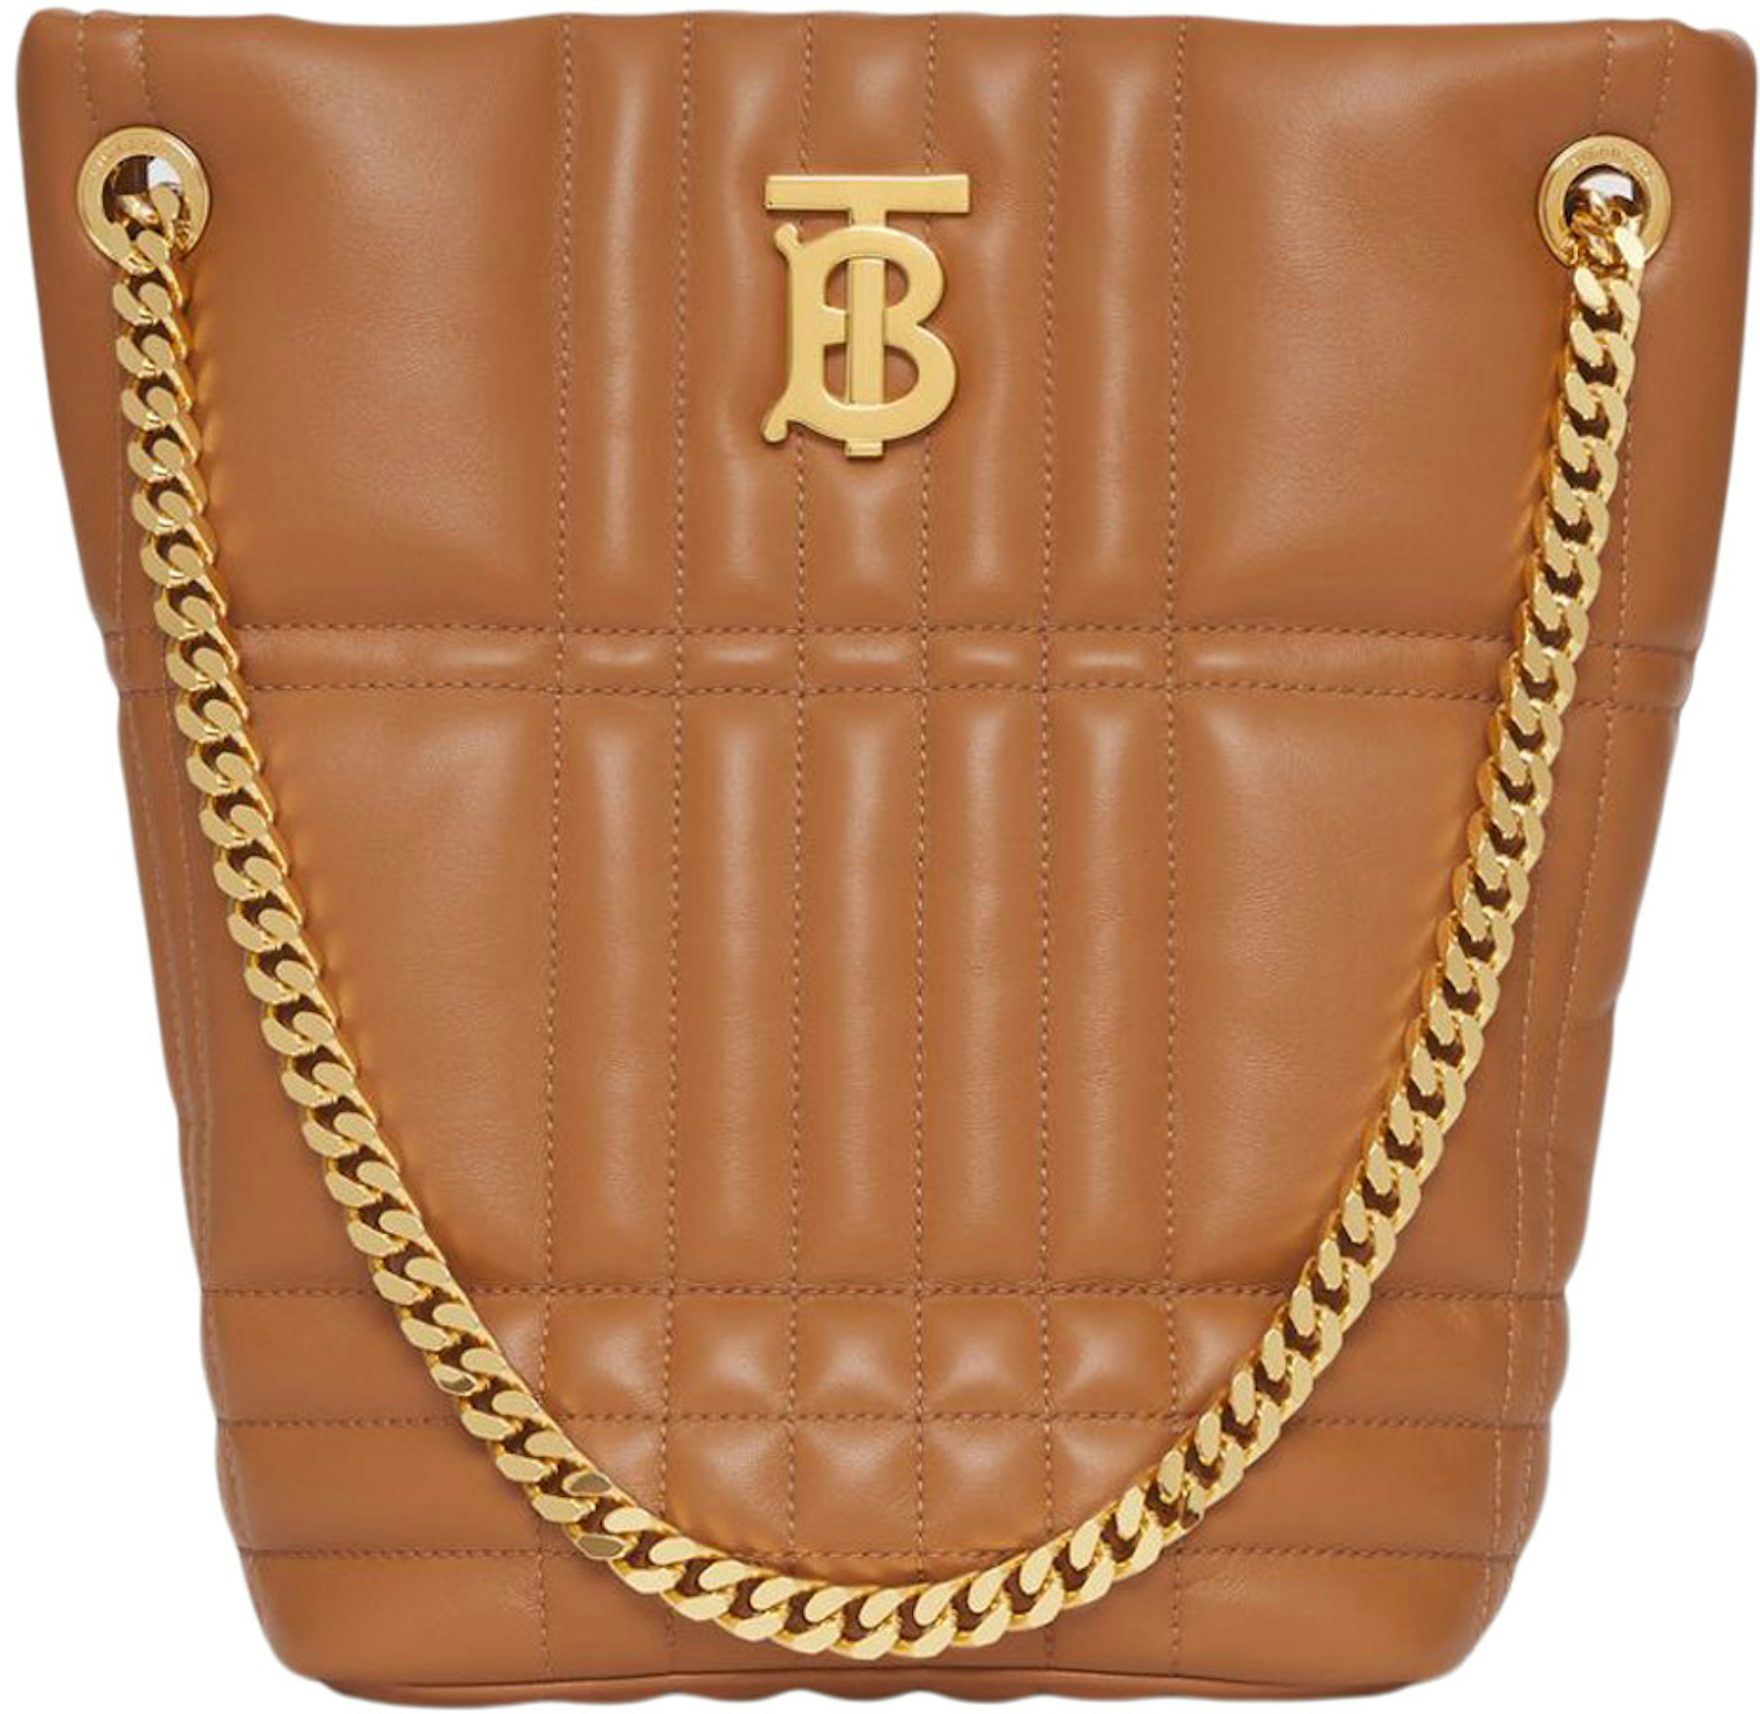 Burberry Medium Leather Lola Bucket Bag